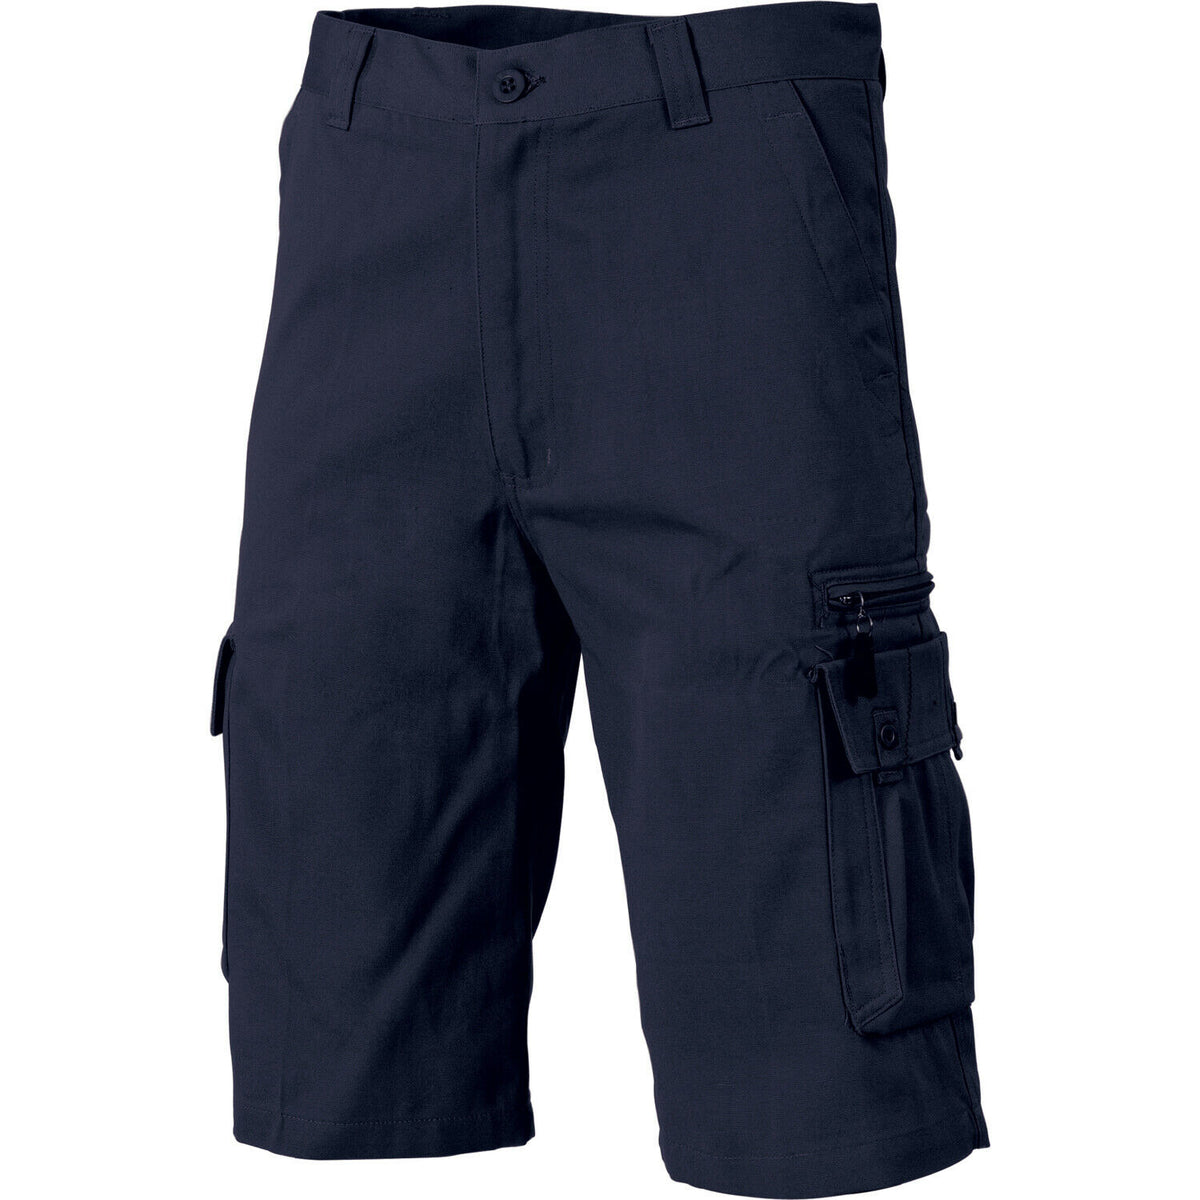 DNC Workwear Men Island Duck Weave Cargo Shorts Comfortable Tough Work 5433